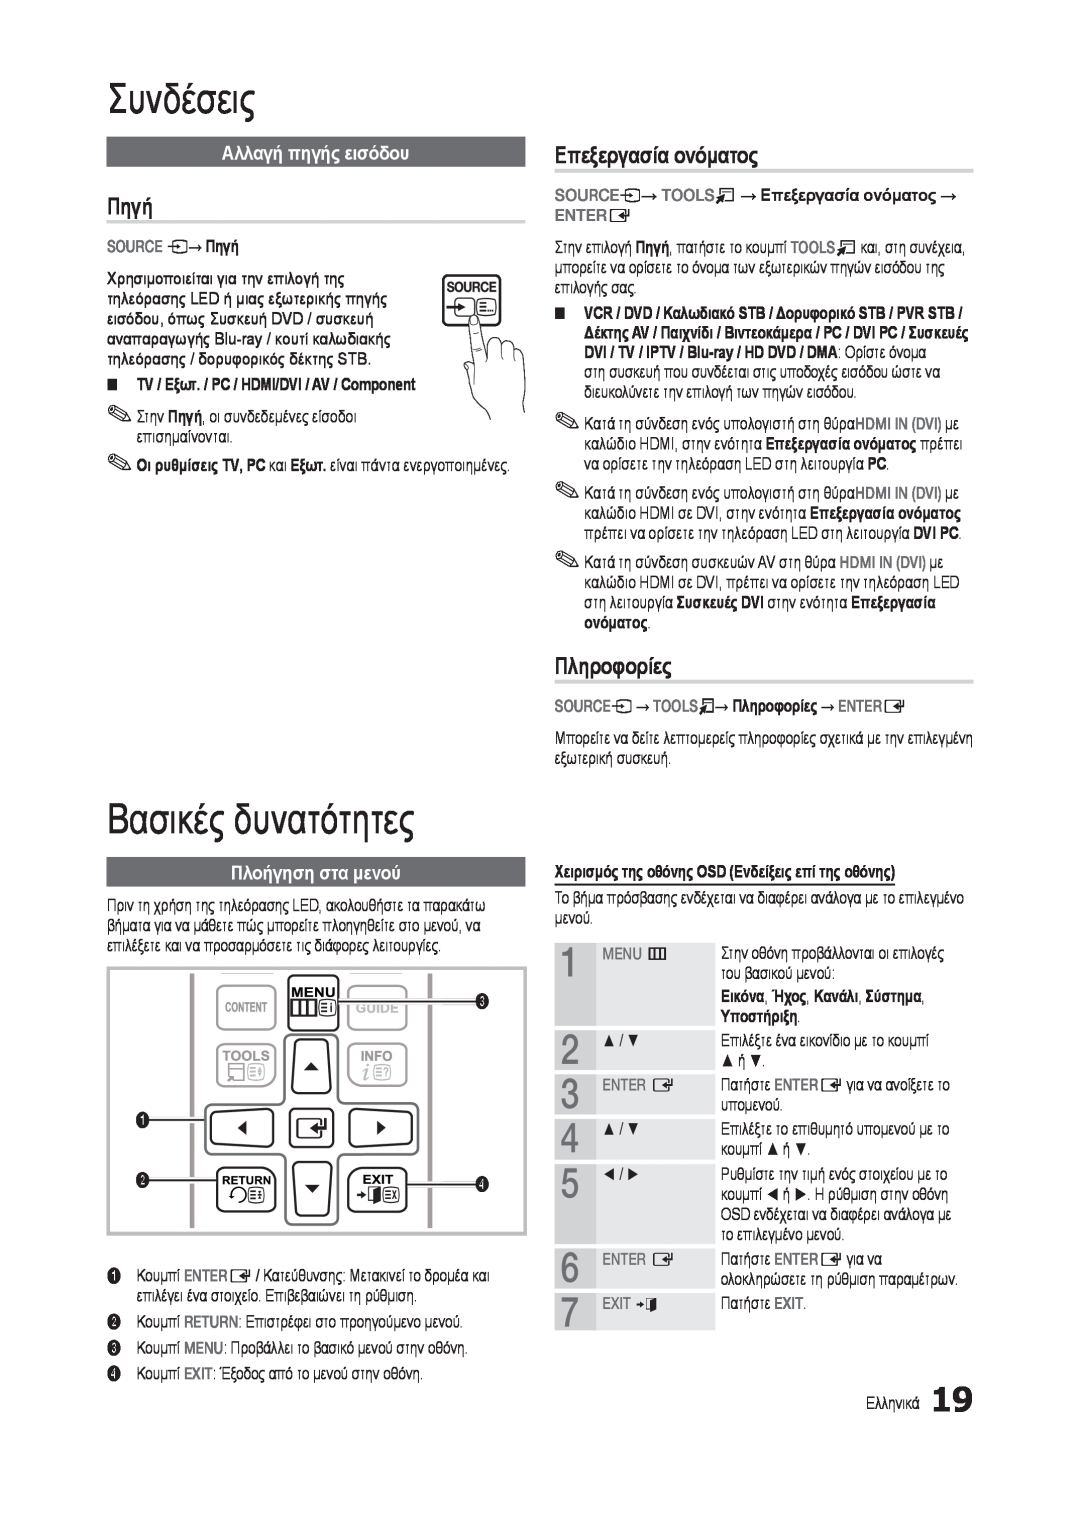 Samsung LT27B300EWY/EN manual Πηγή, Επεξεργασία ονόματος, Πληροφορίες, Αλλαγή πηγής εισόδου, Πλοήγηση στα μενού, Συνδέσεις 